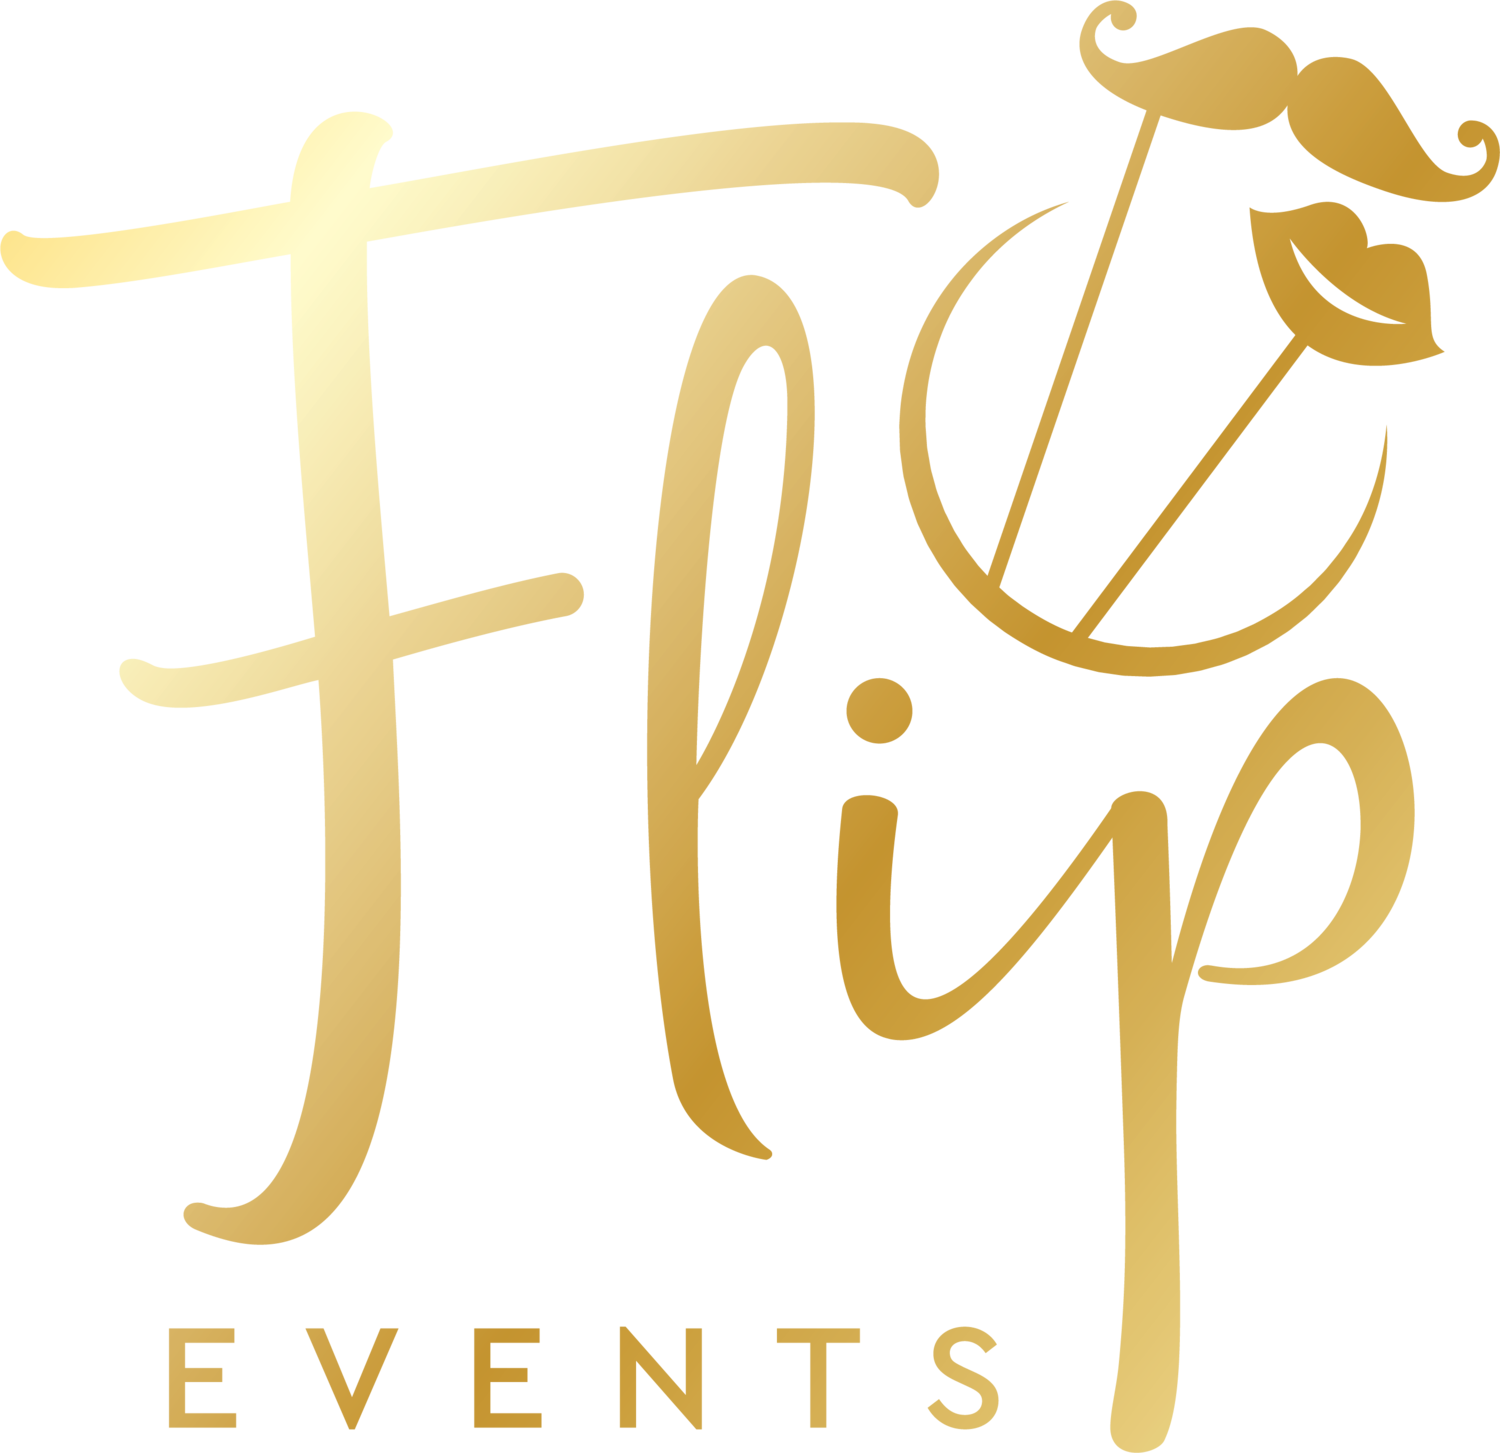 FLIP EVENTS